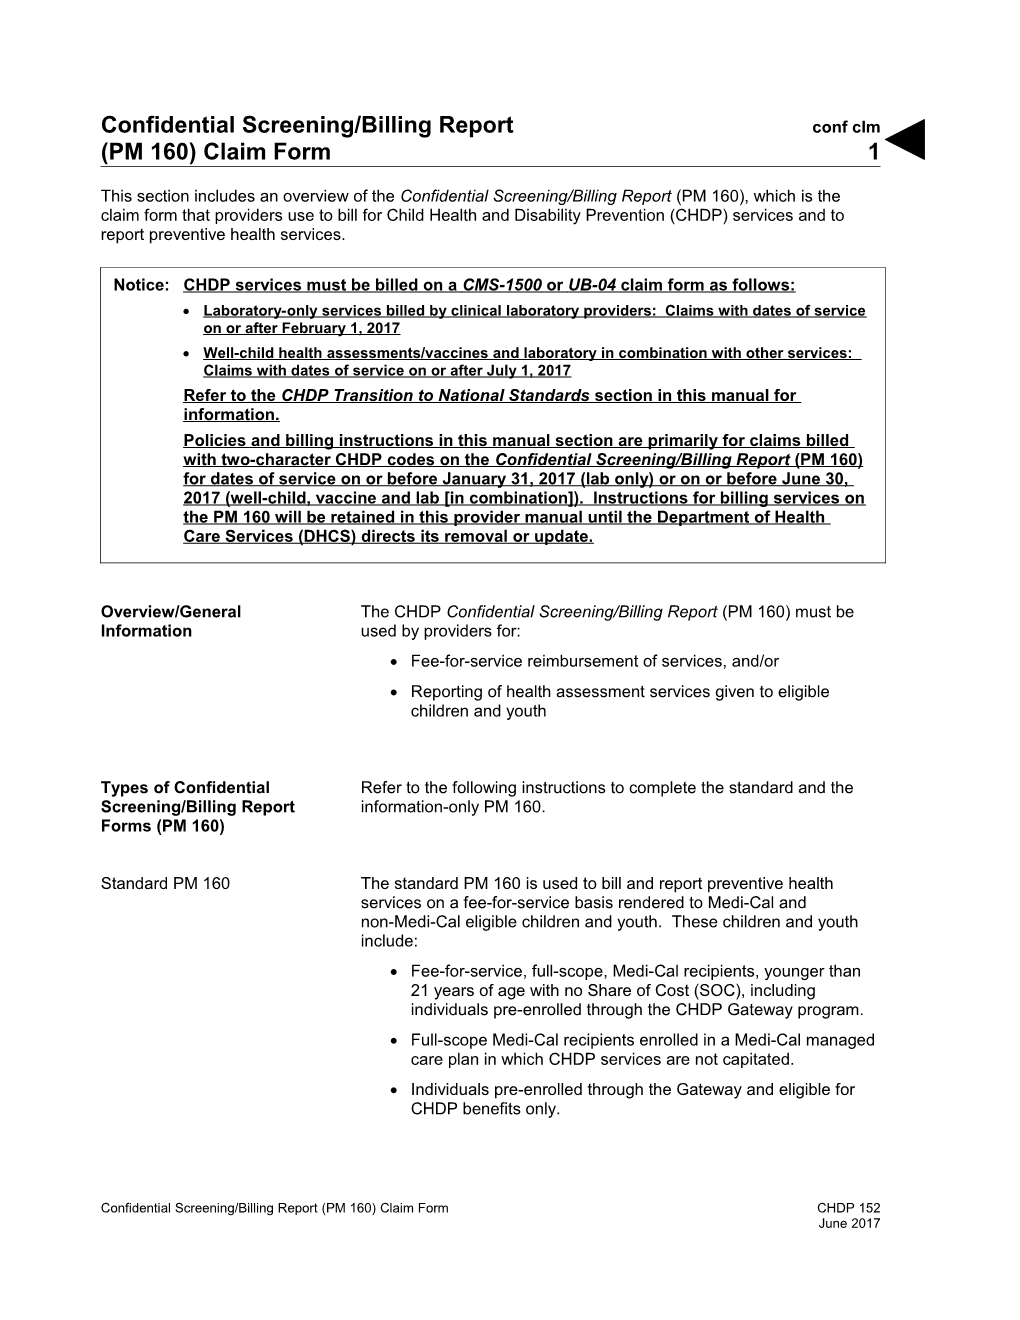 Confidential Screening/Billing Report (PM 160) Claim Form (Conf Clm)